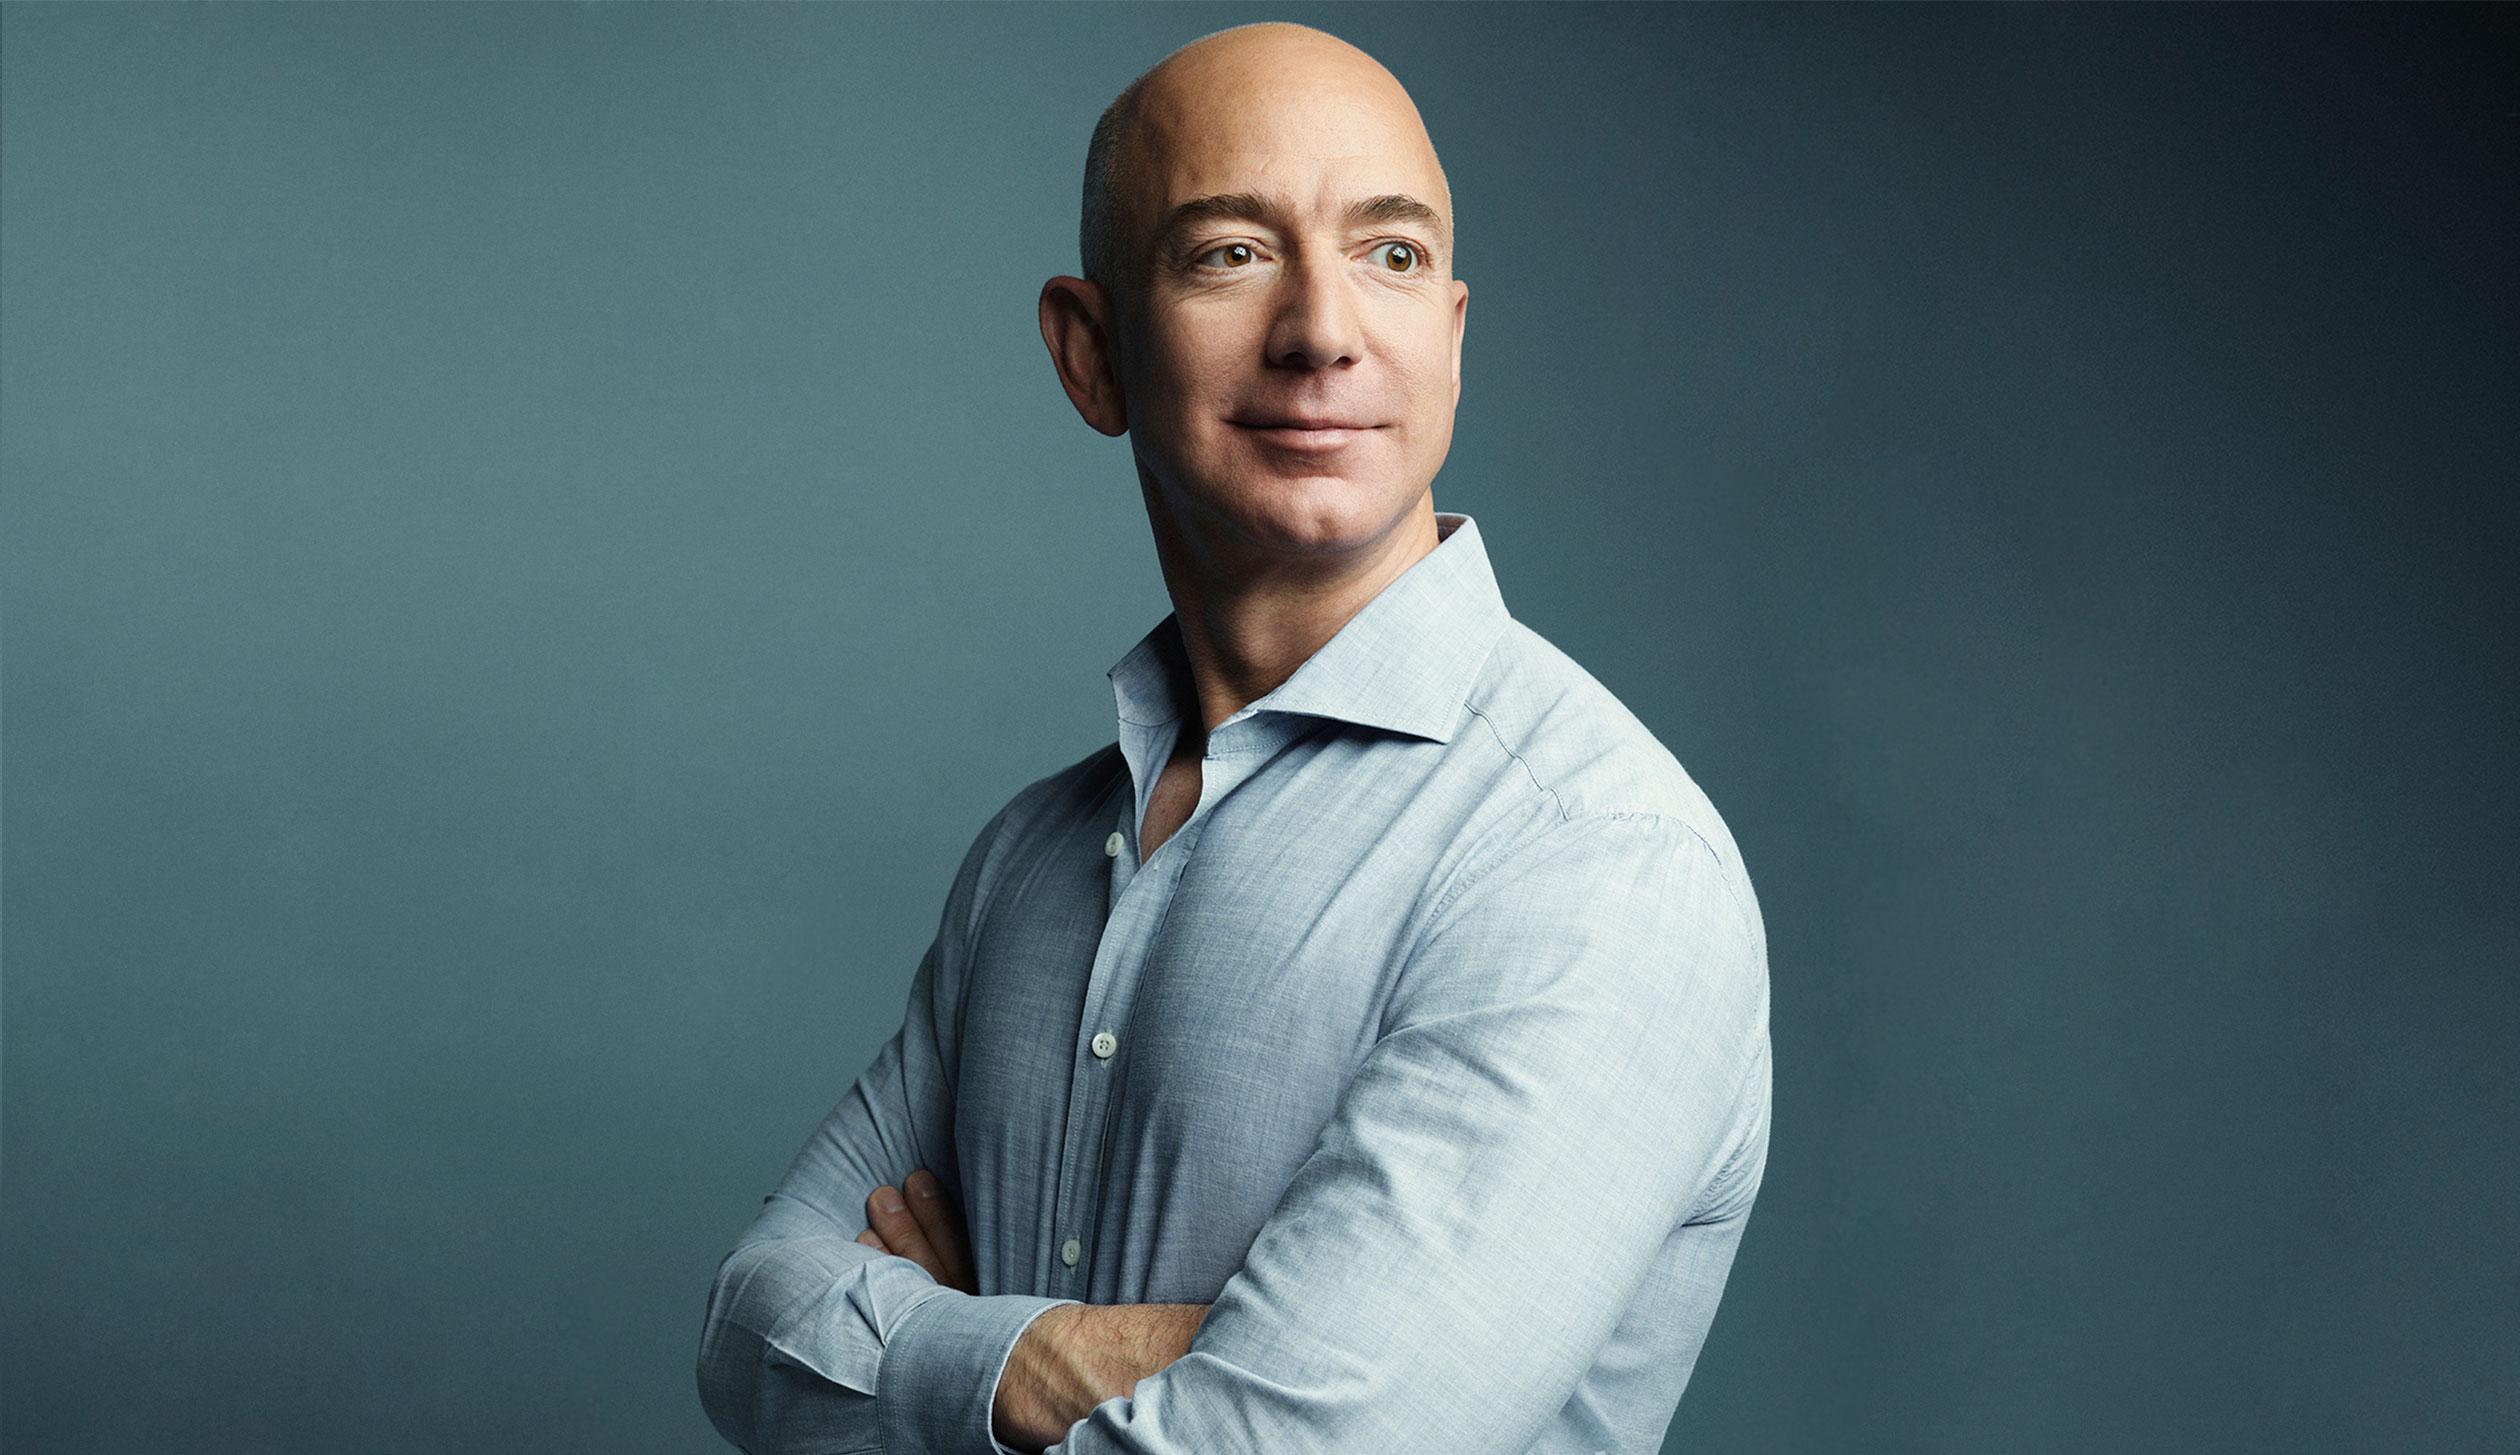 Key Takeaways from Jeff Bezos on How He Runs Amazon